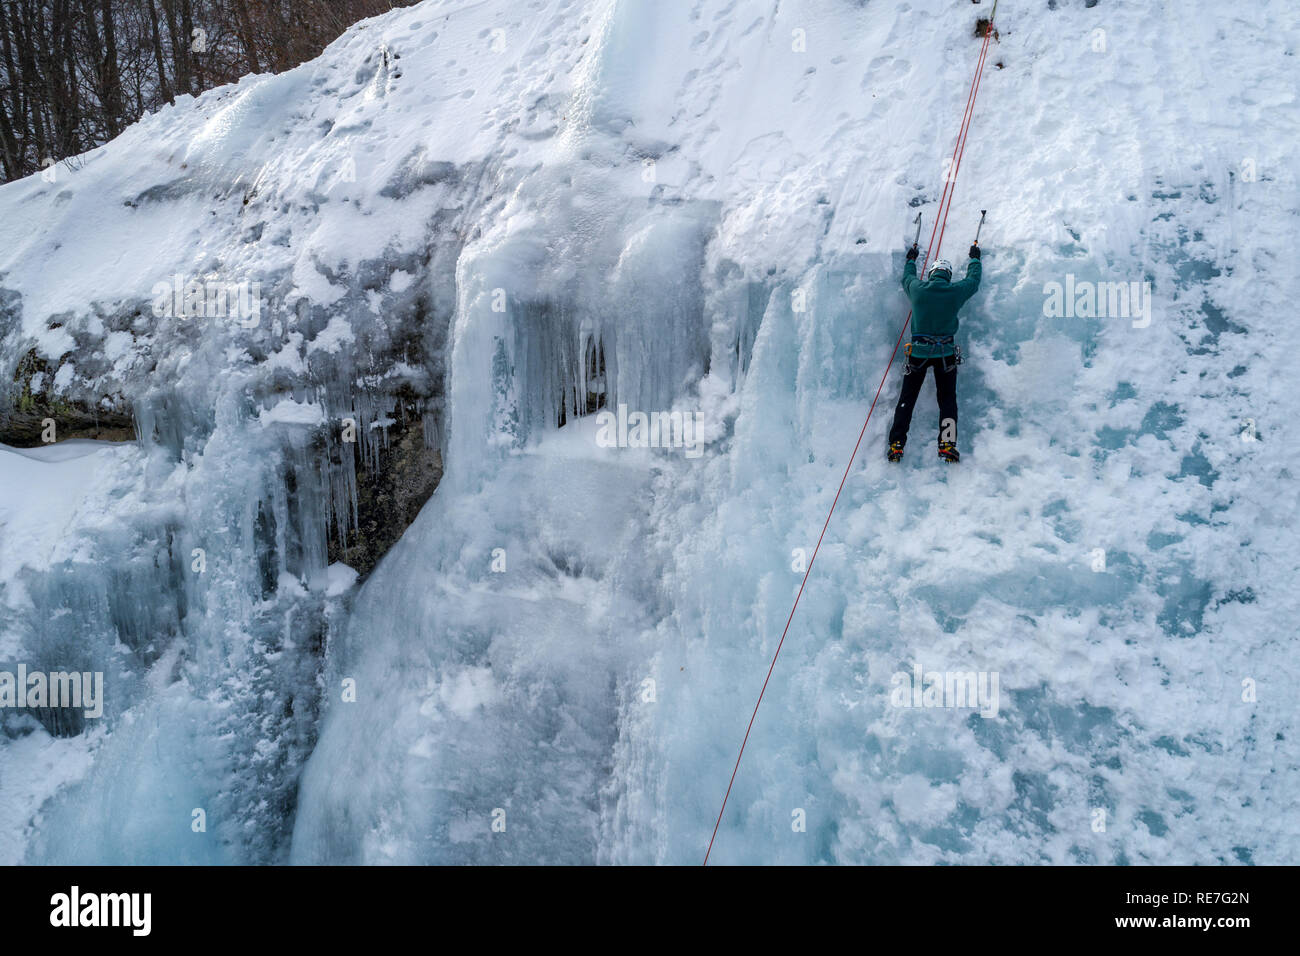 Ice climbing the North Greece, man climbing frozen waterfall. Stock Photo